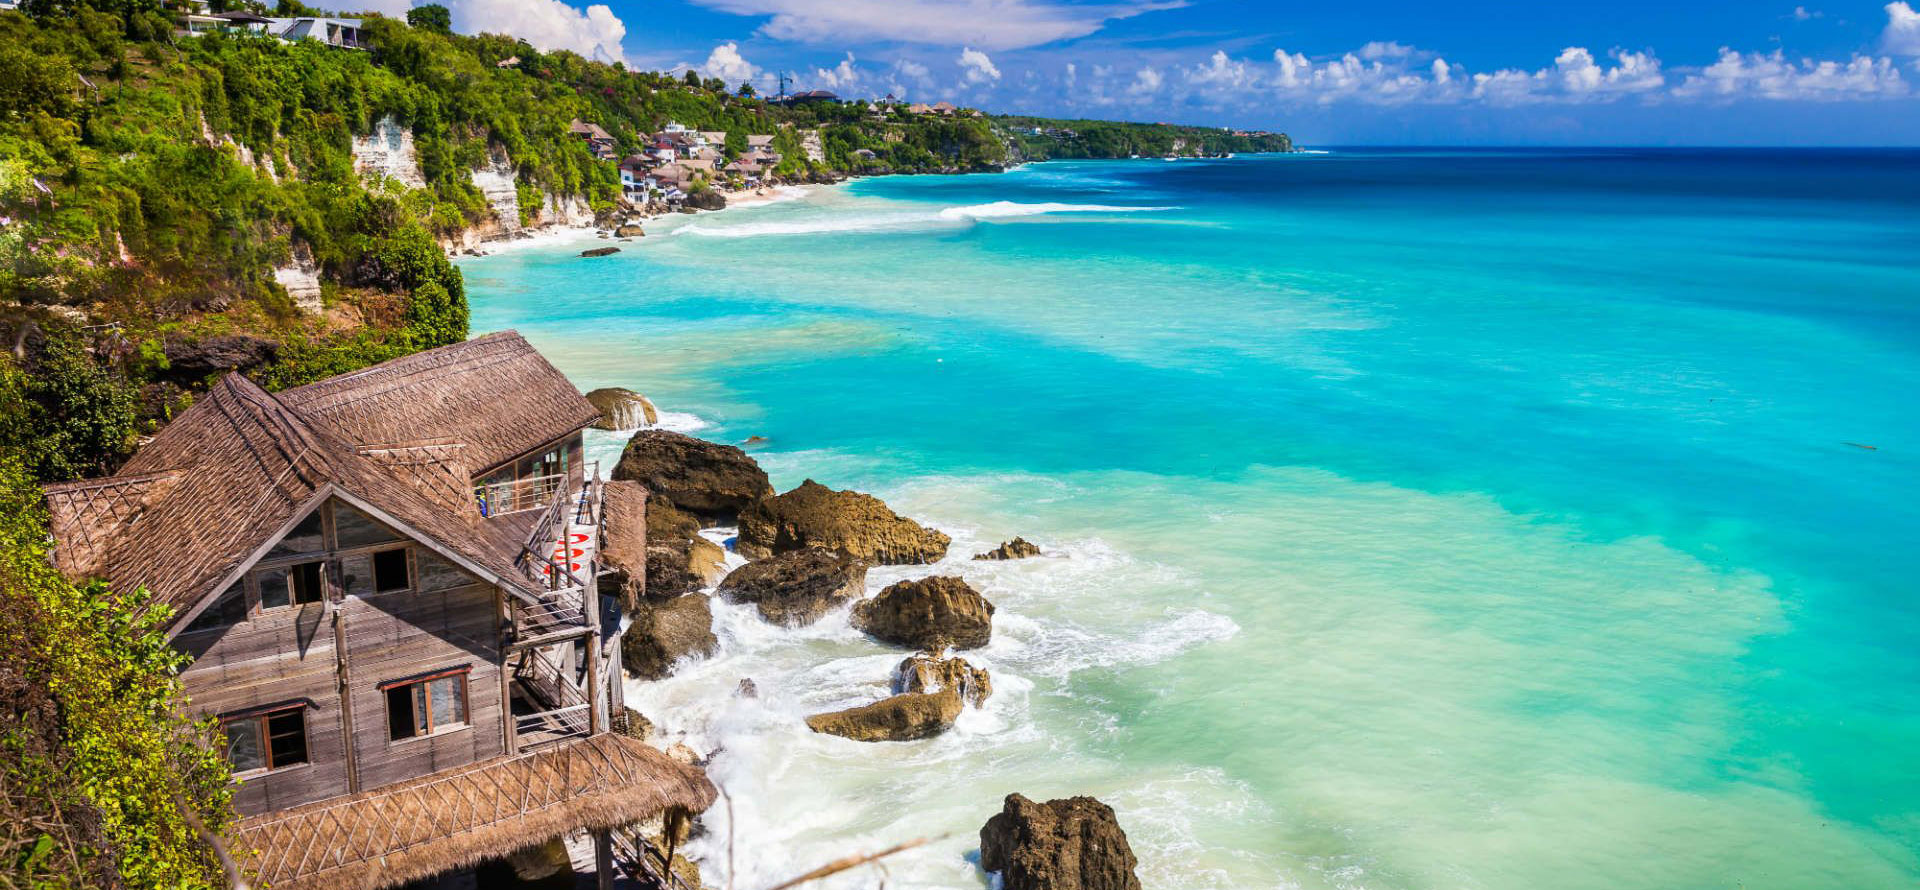 Bali honeymoon rocks and waves.